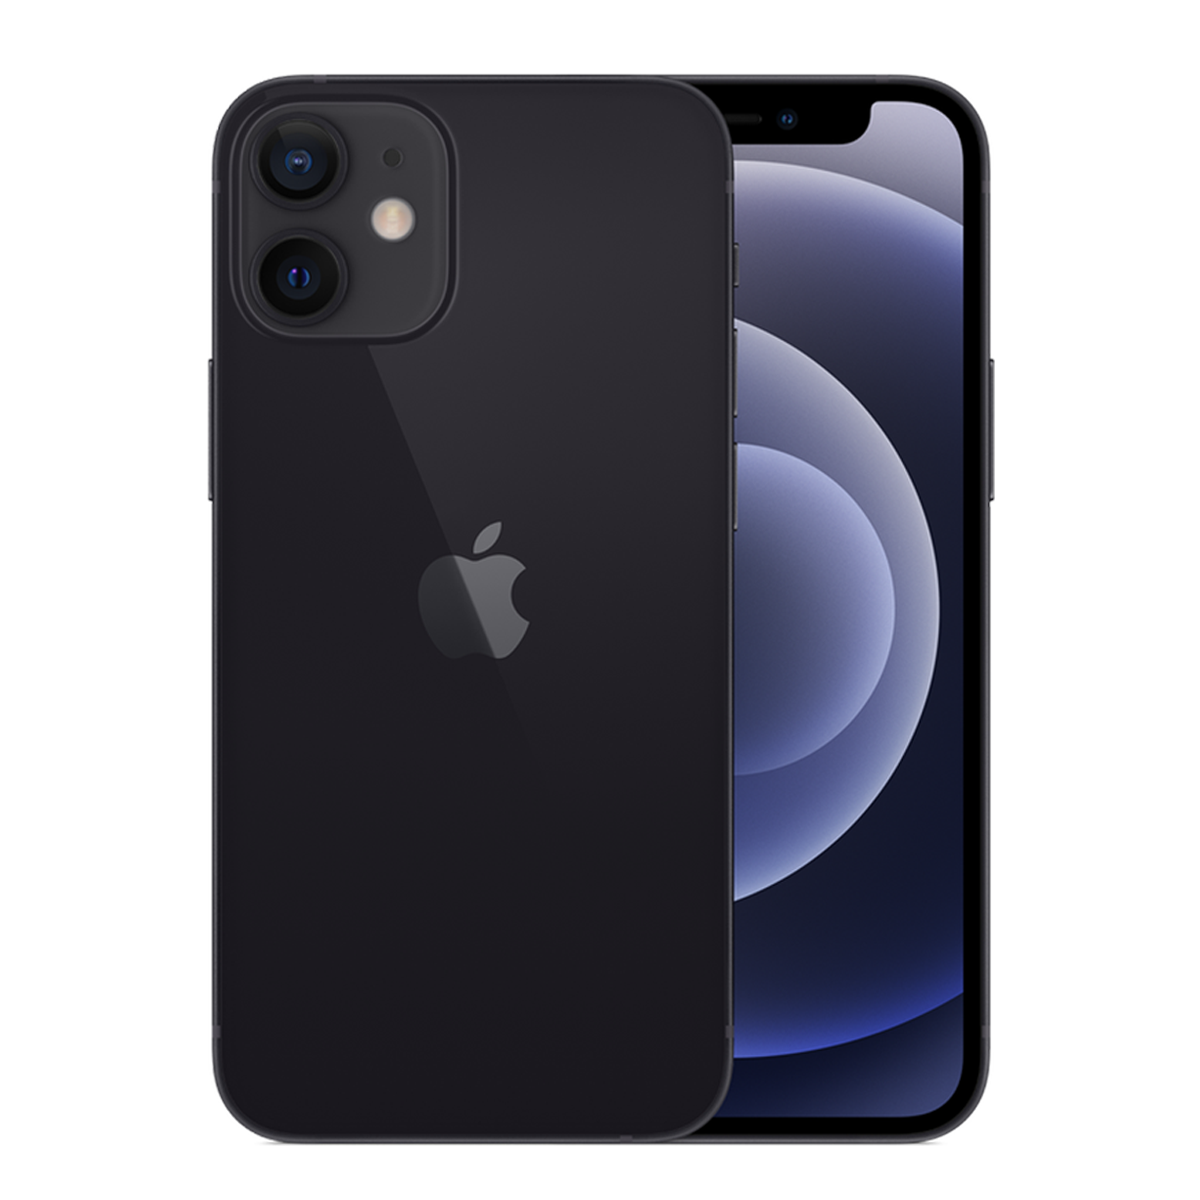 iPhone 12 mini, Black, 64GB (Official Stock)